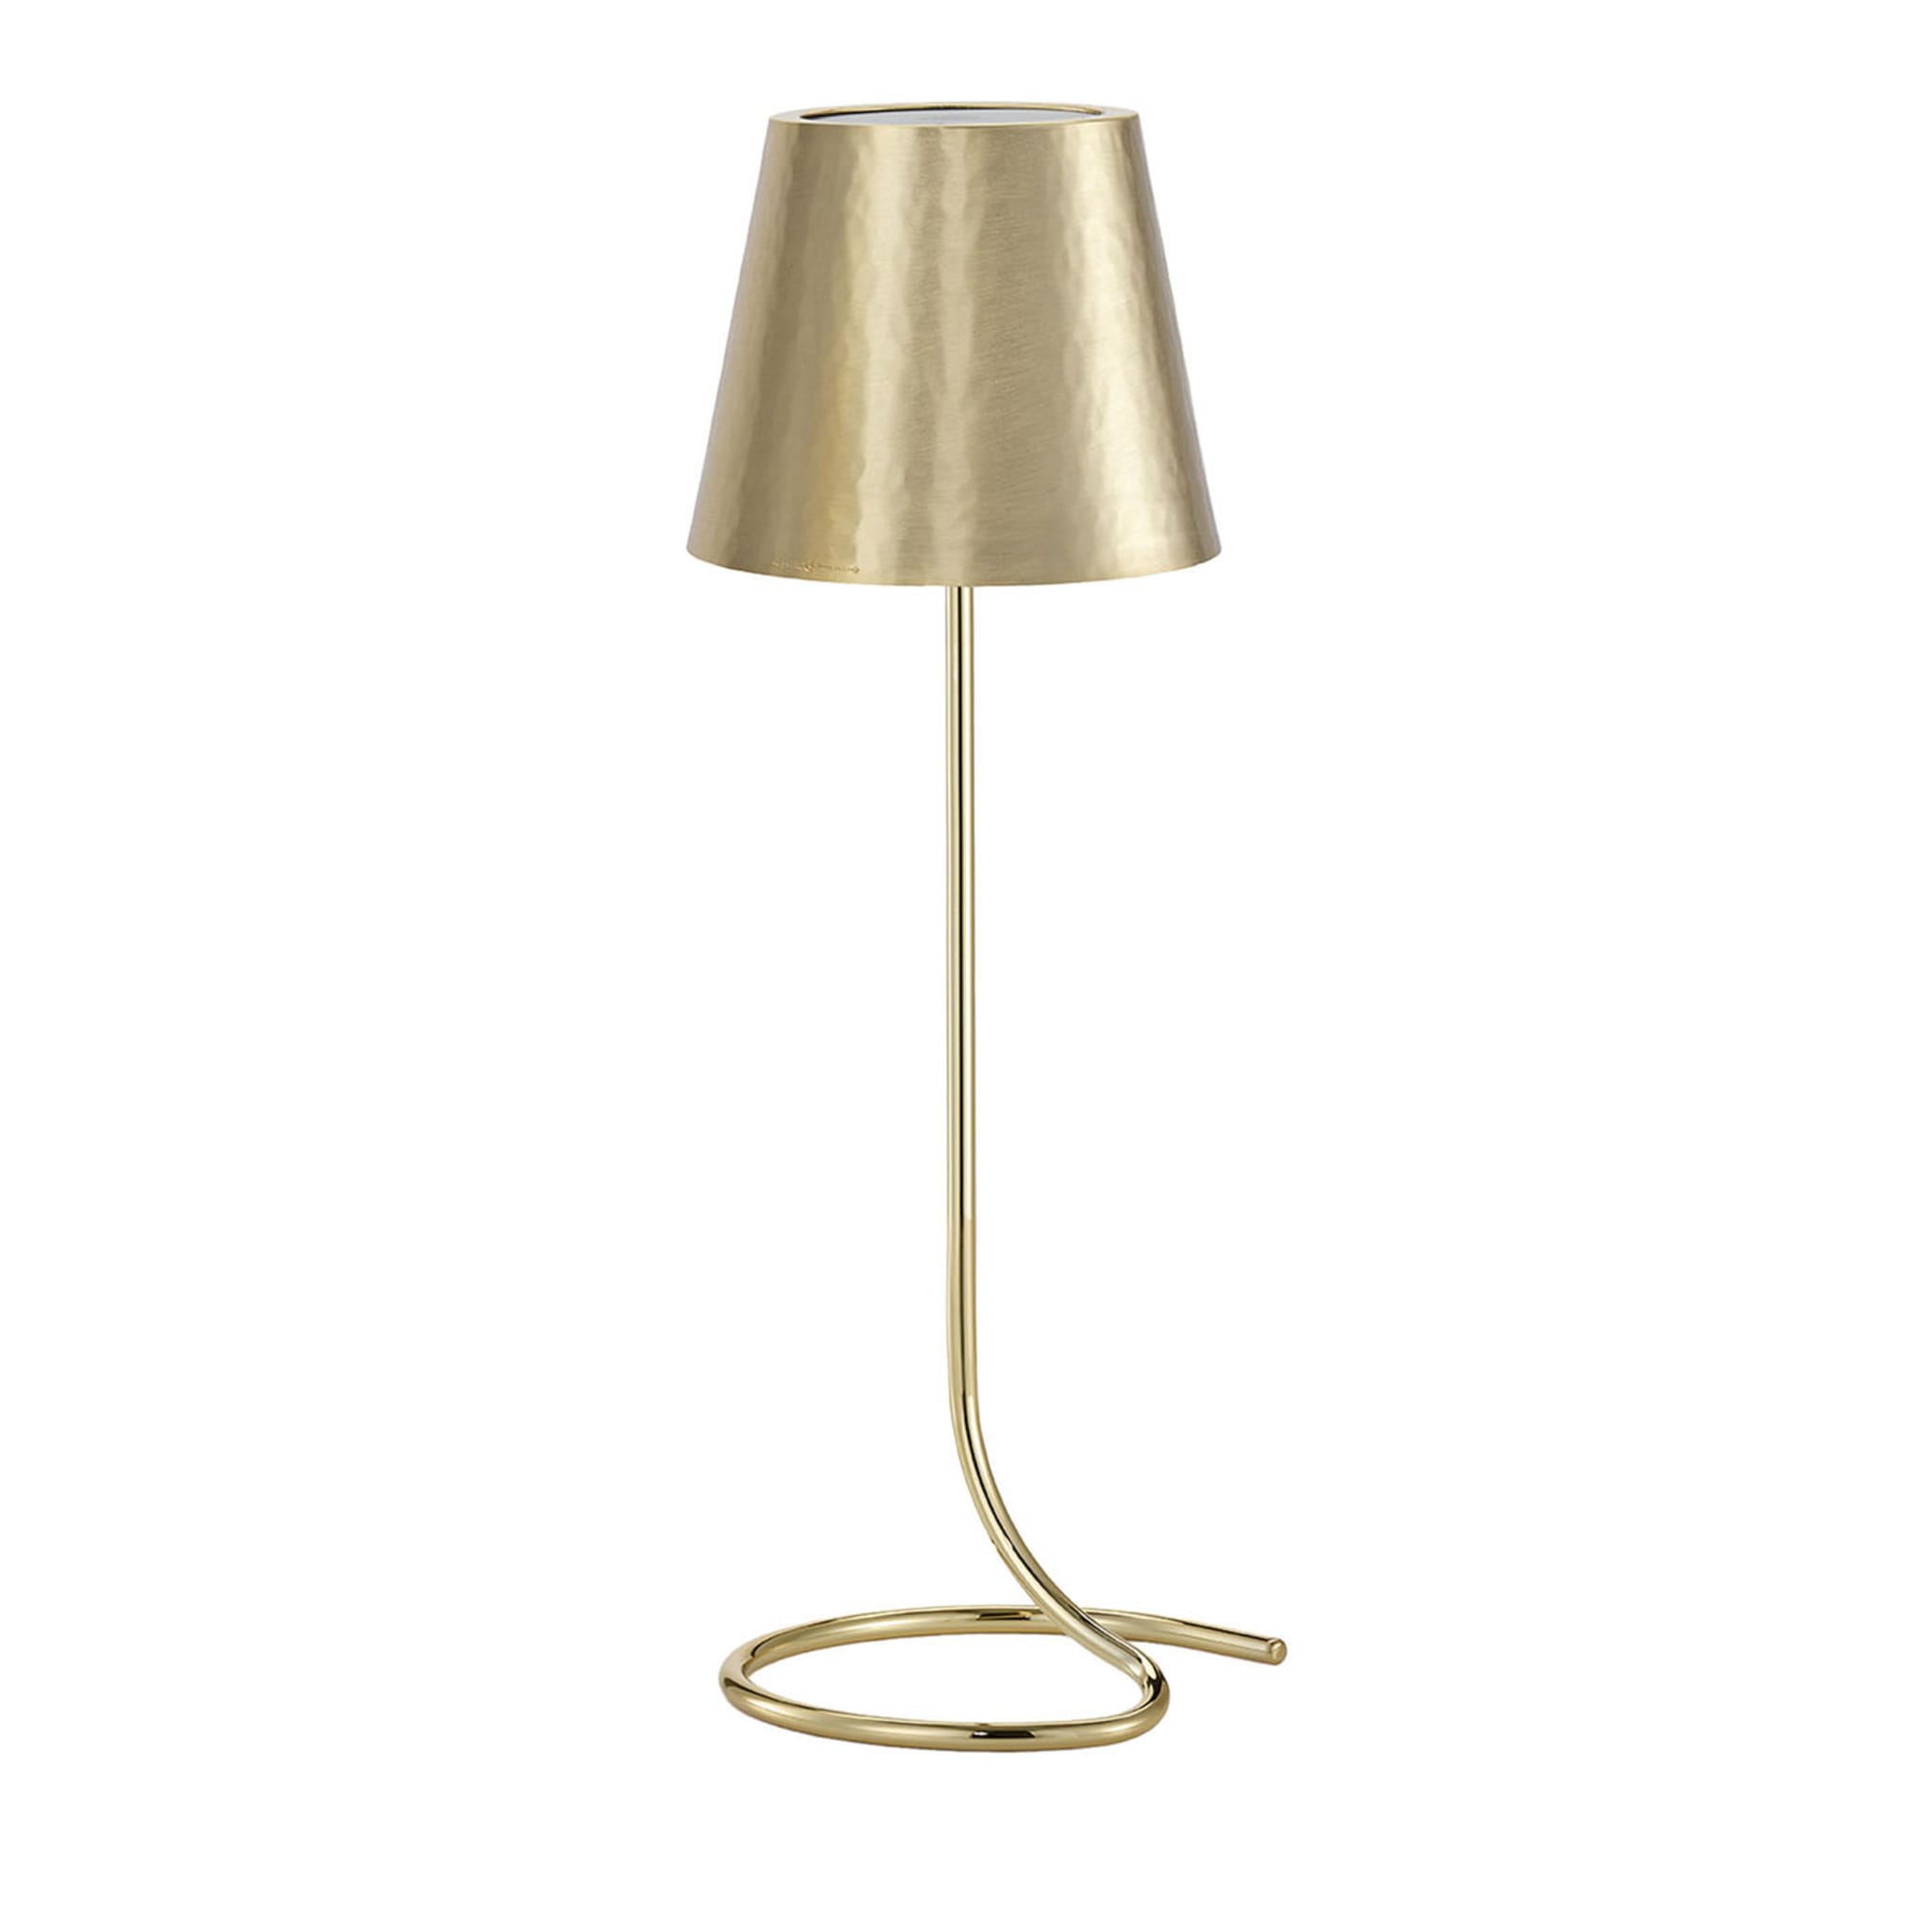 Goldene Lampe #2 von Itamar Harari - Hauptansicht